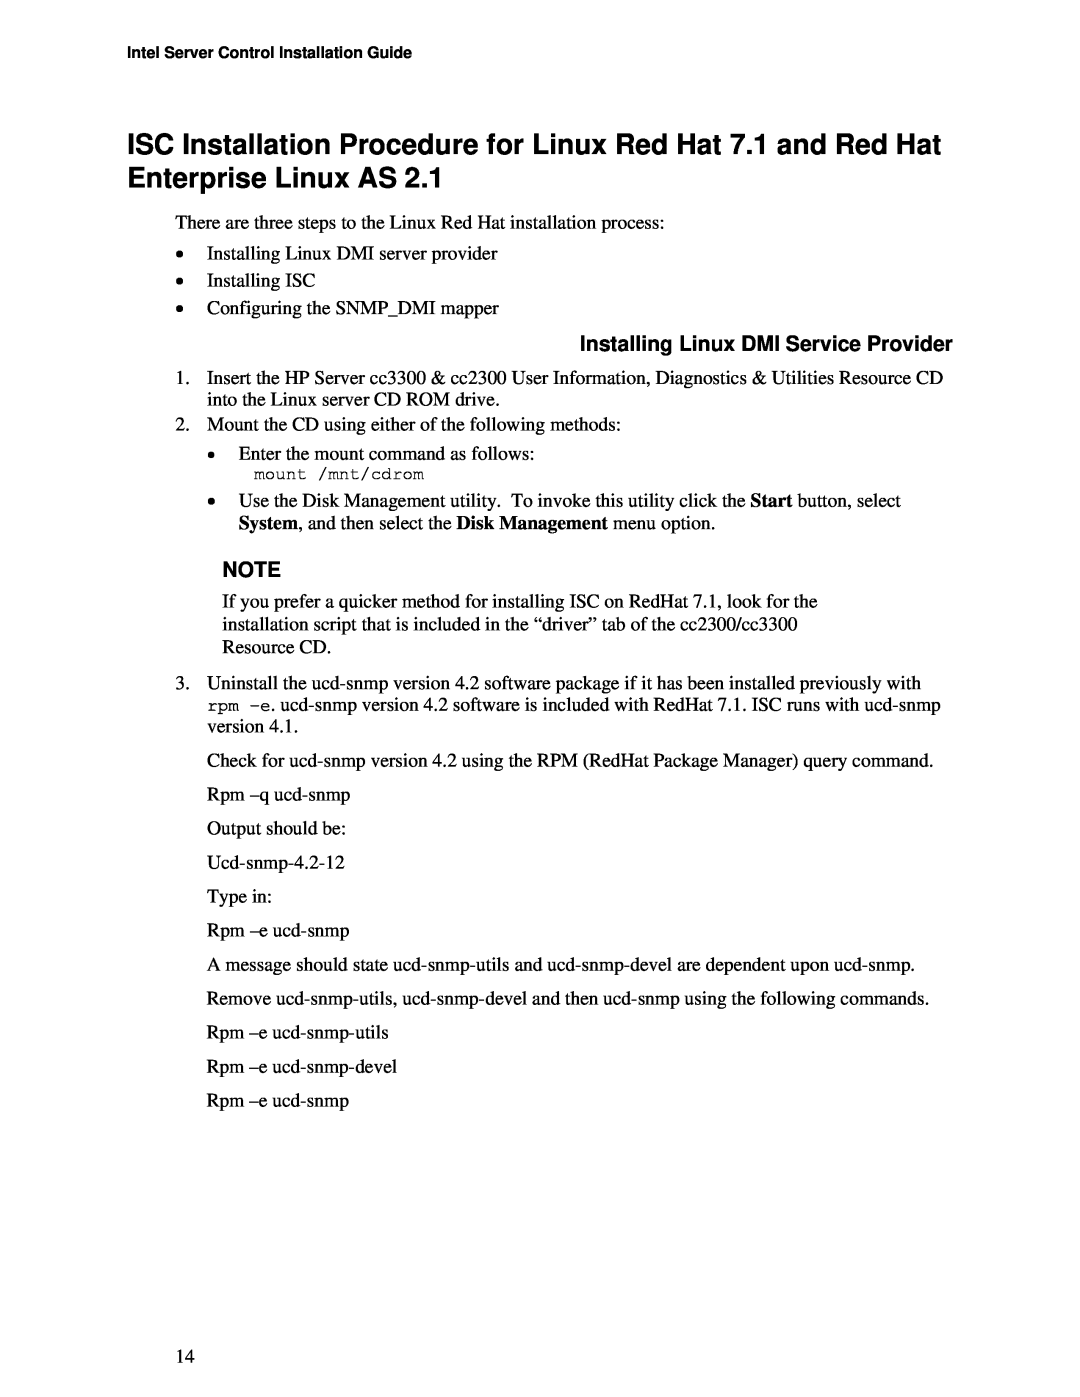 Intel cc3300, cc2300 manual Installing Linux DMI Service Provider 